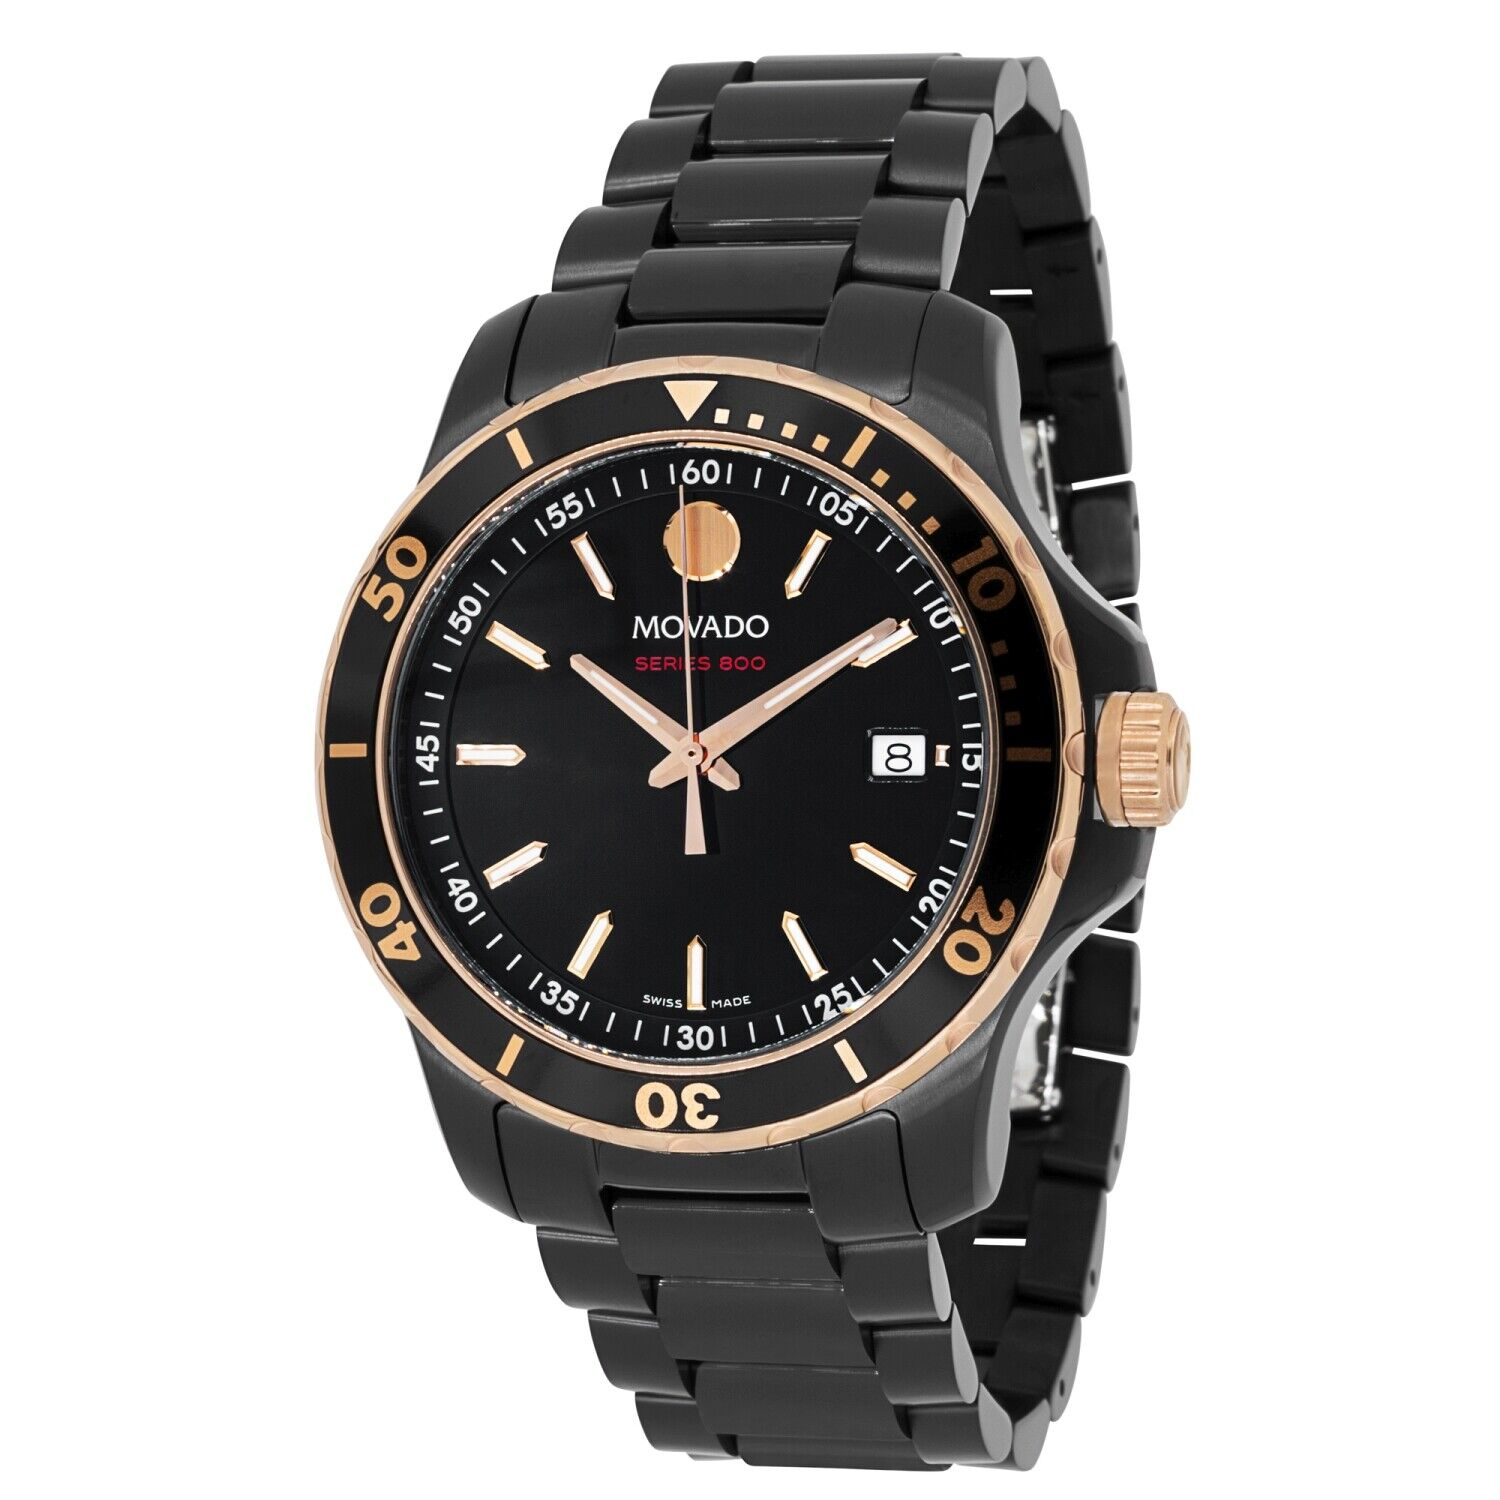 Movado Men's Series 800 Black Dial Watch - 2600162